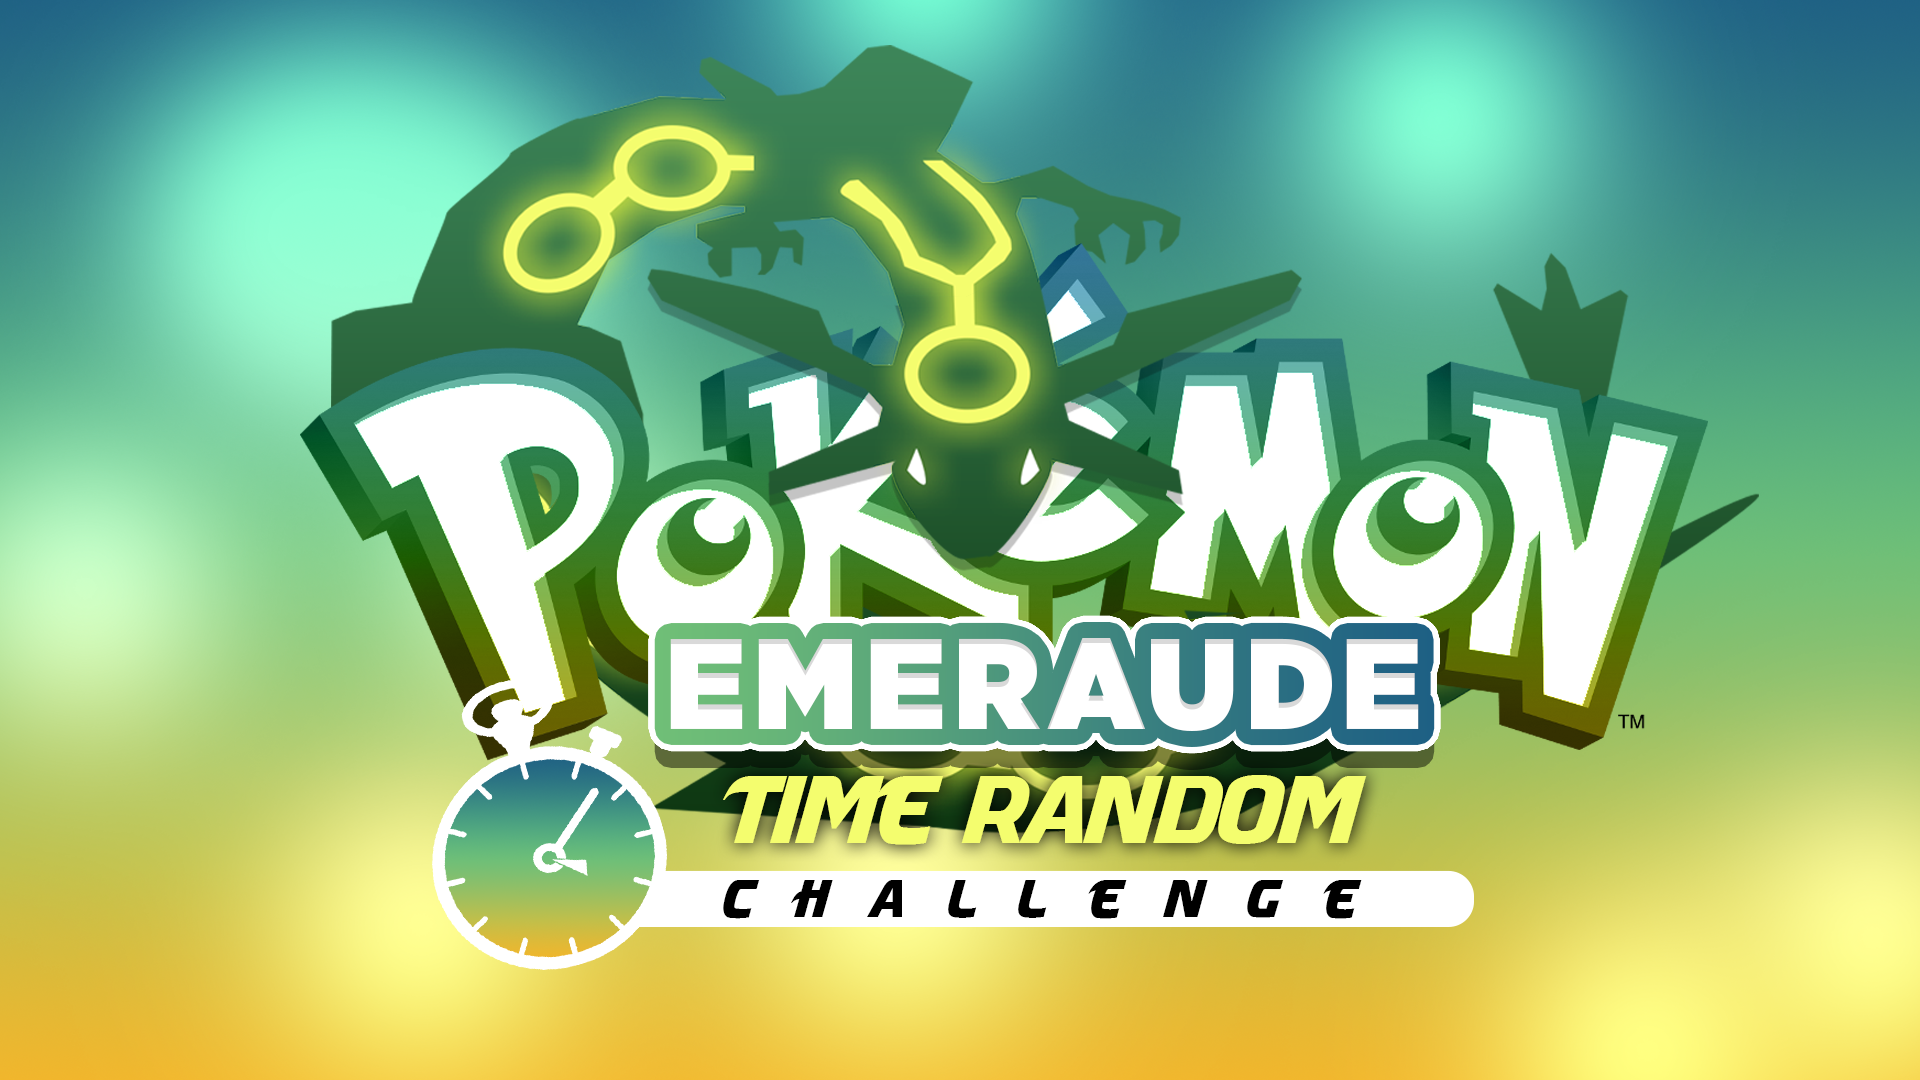 COMMISSION] Pokemon Emerald Randomizer Nuzlocke by TheShidori on DeviantArt